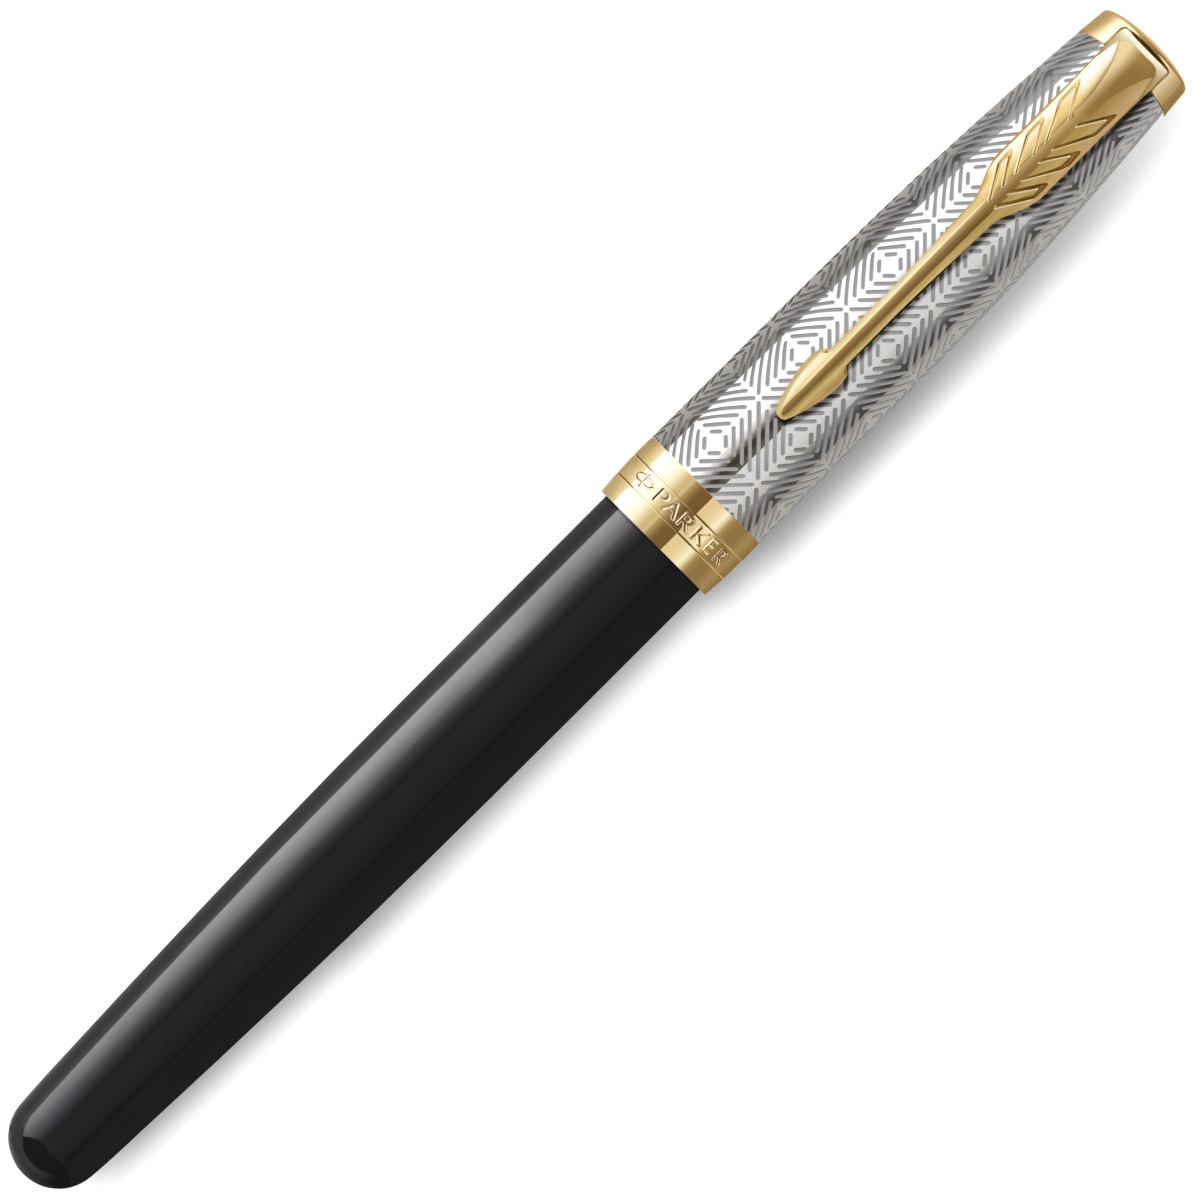  Ручка перьевая Parker Sonnet Premium F537, Metal Black GT (Перо F), фото 2